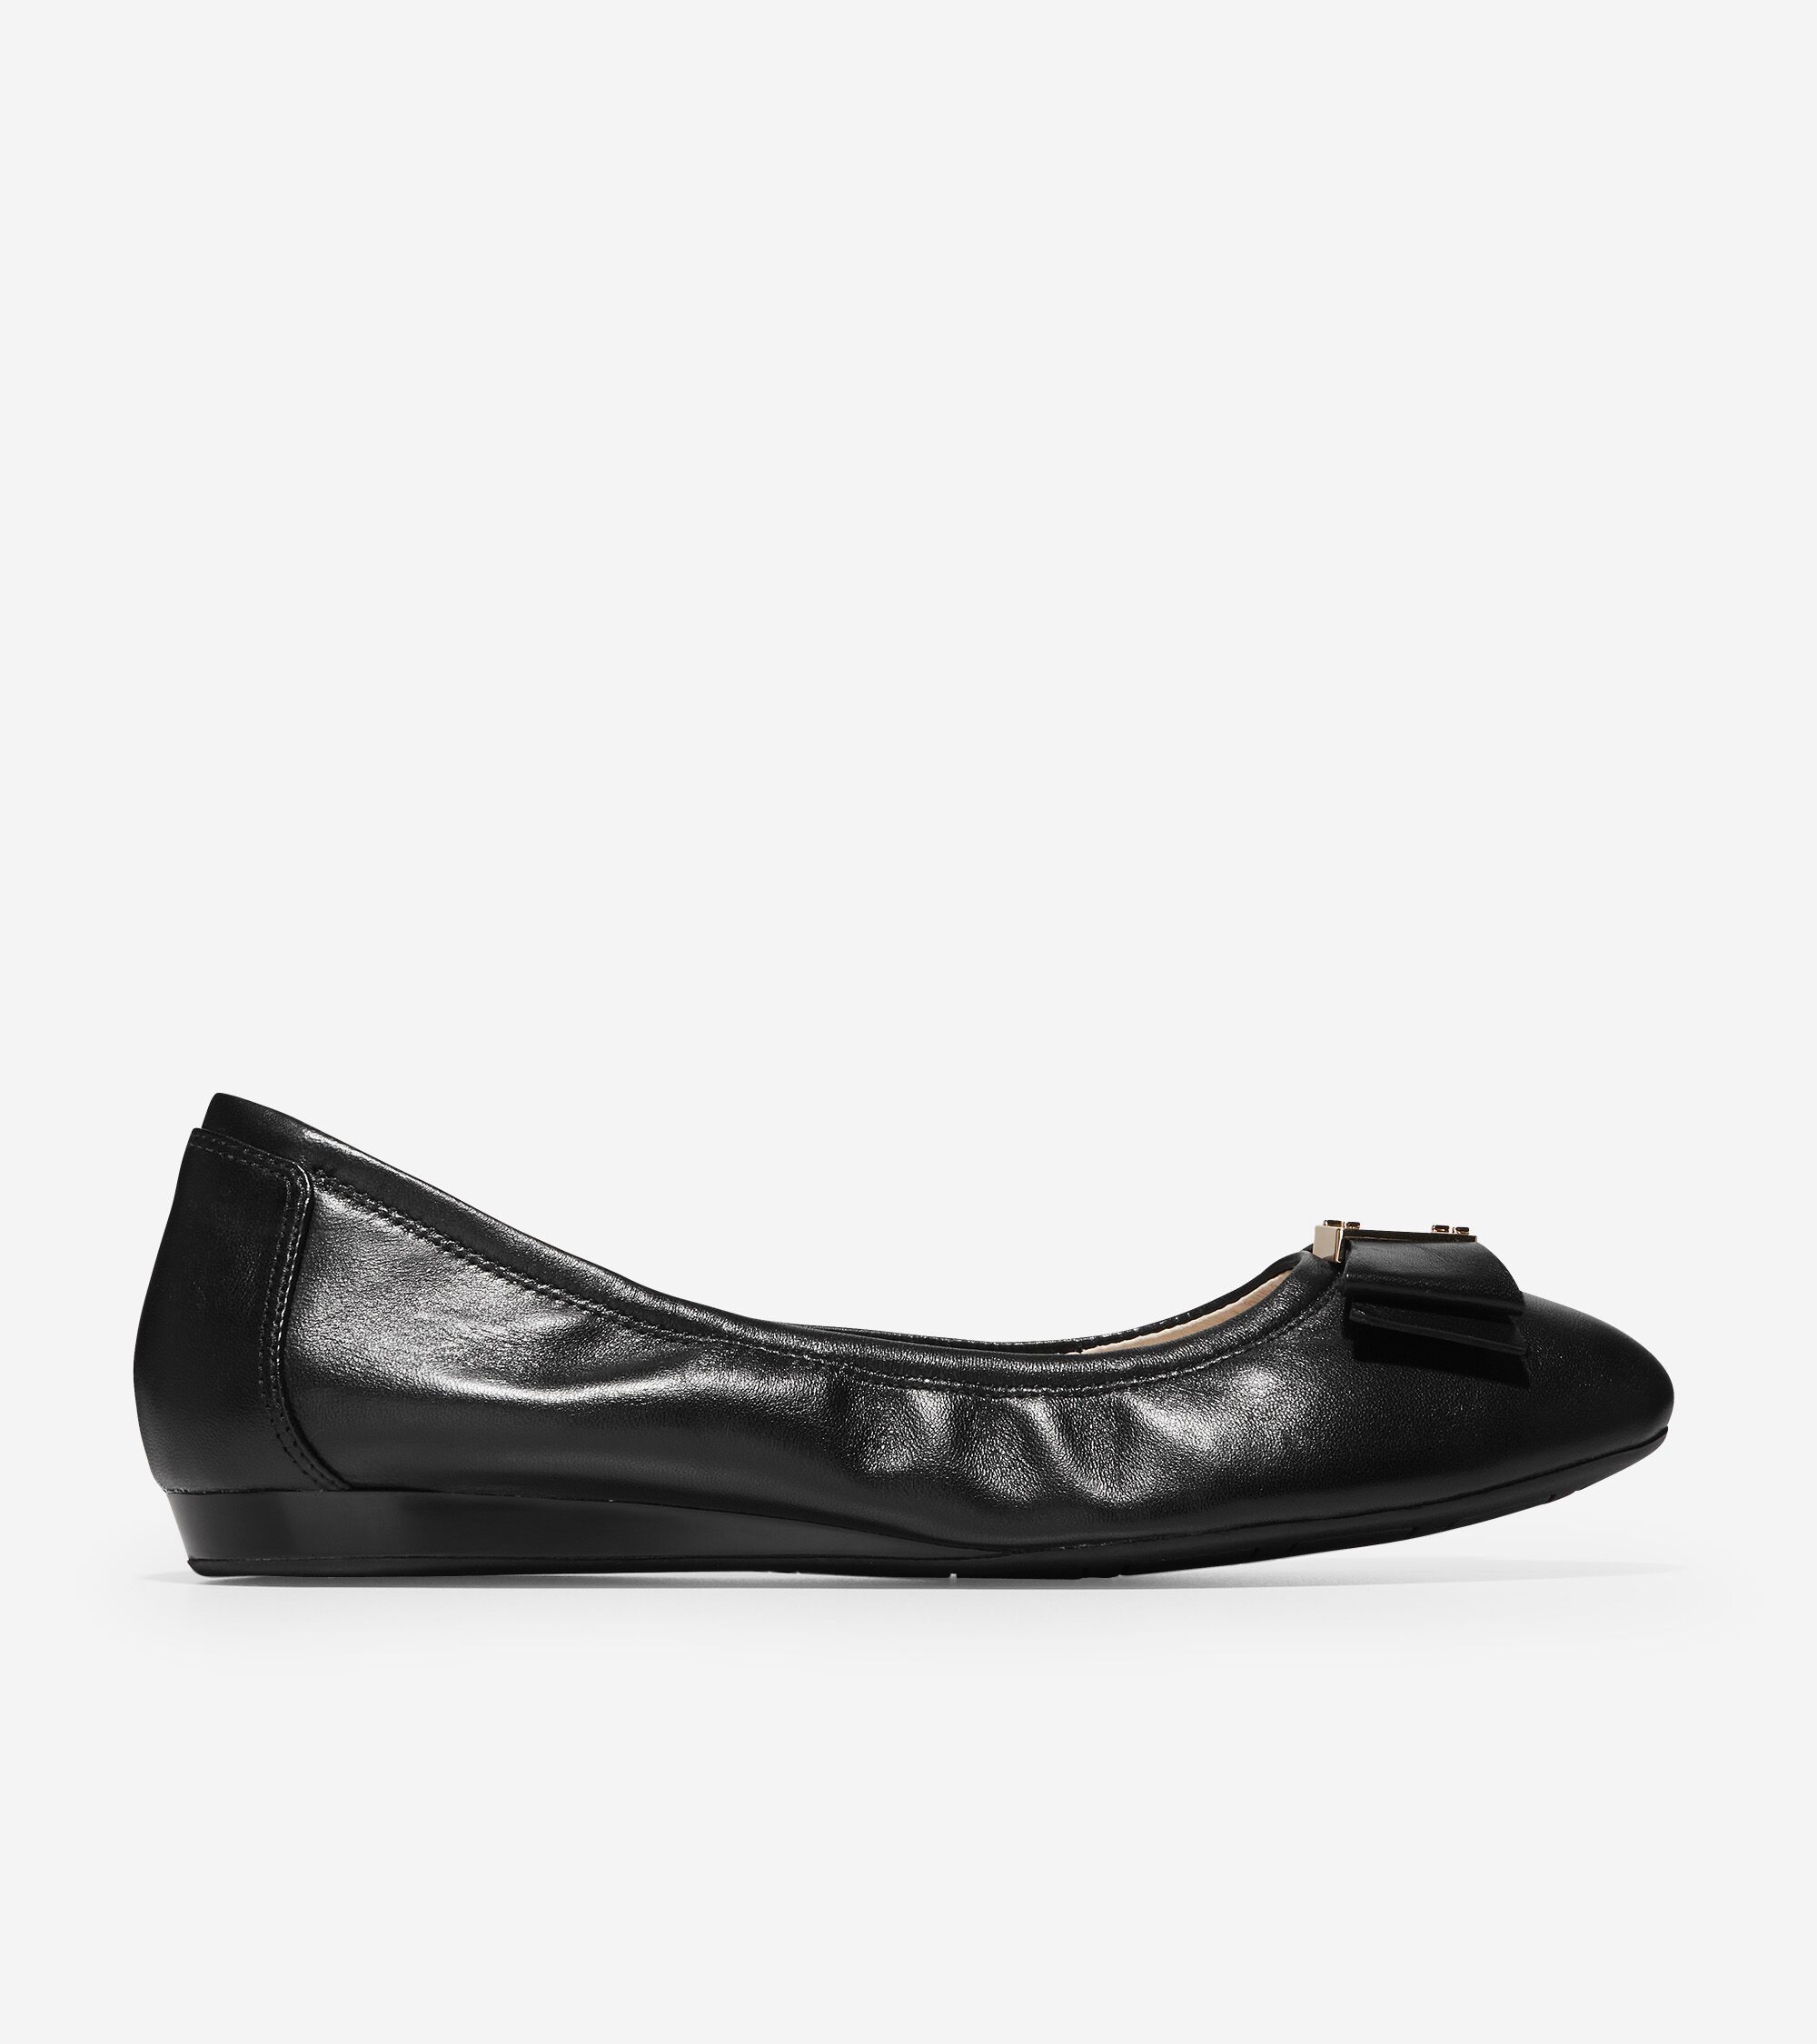 black dress shoes womens flats